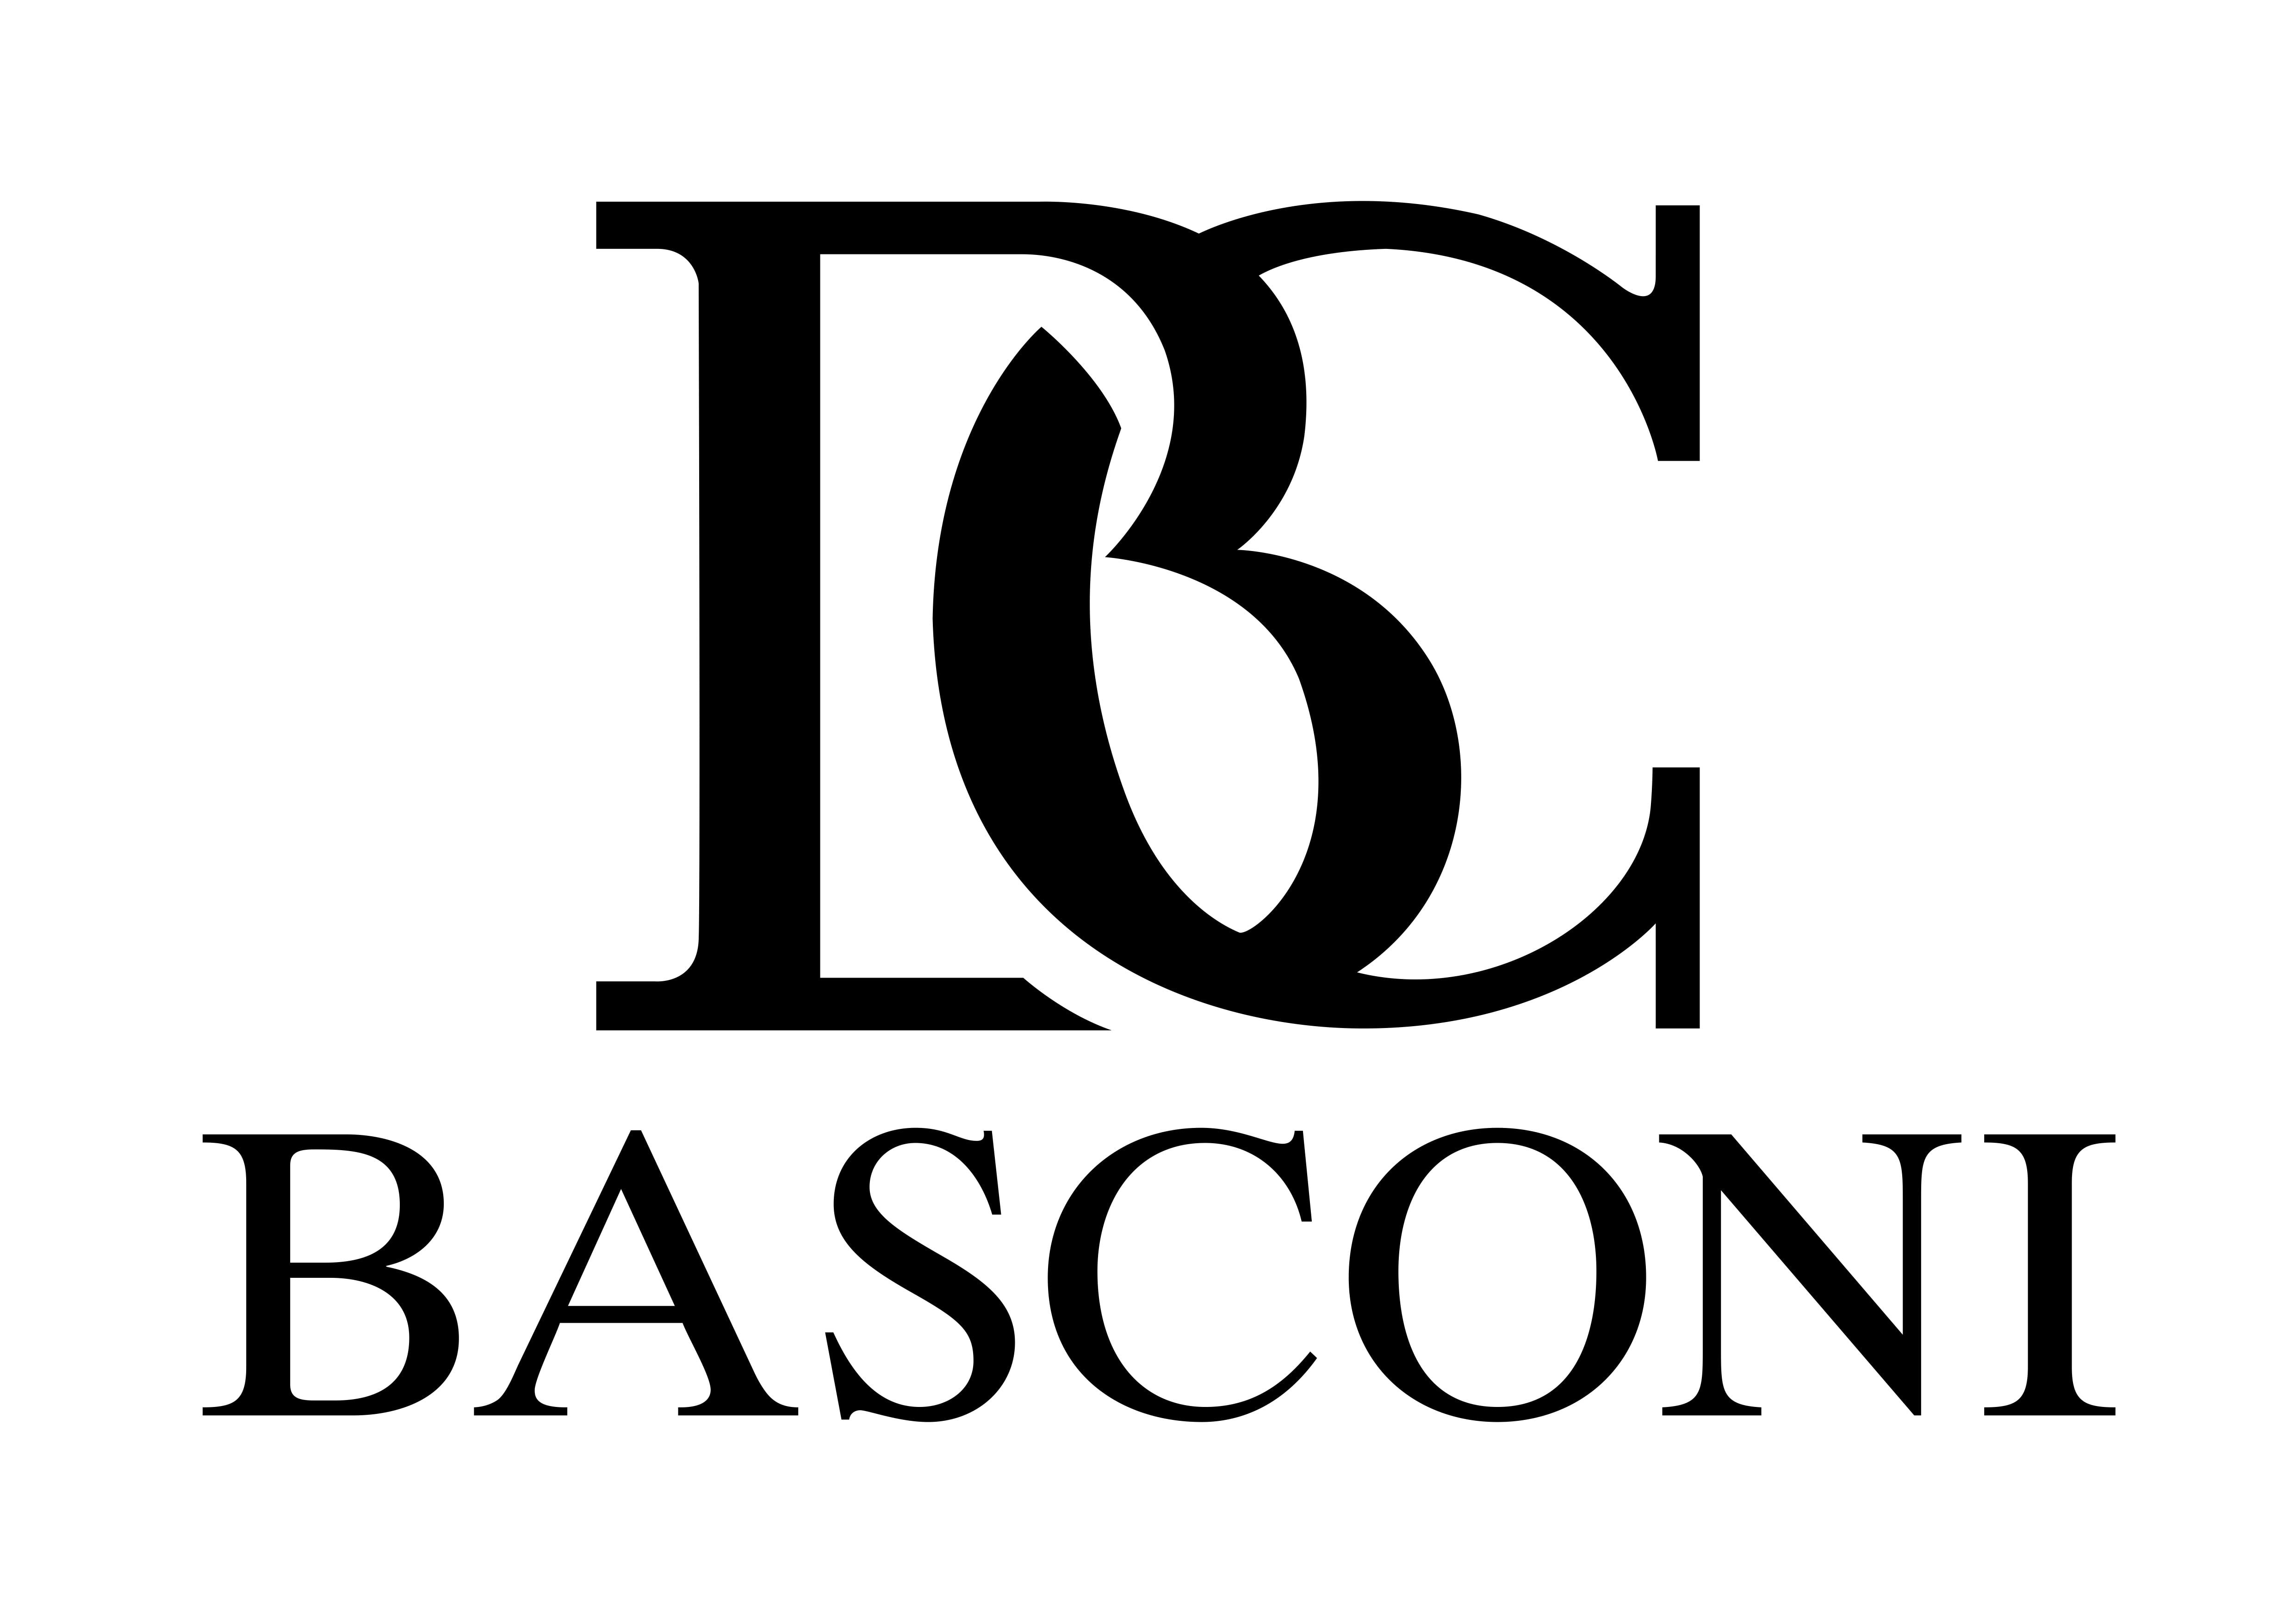 Basconi